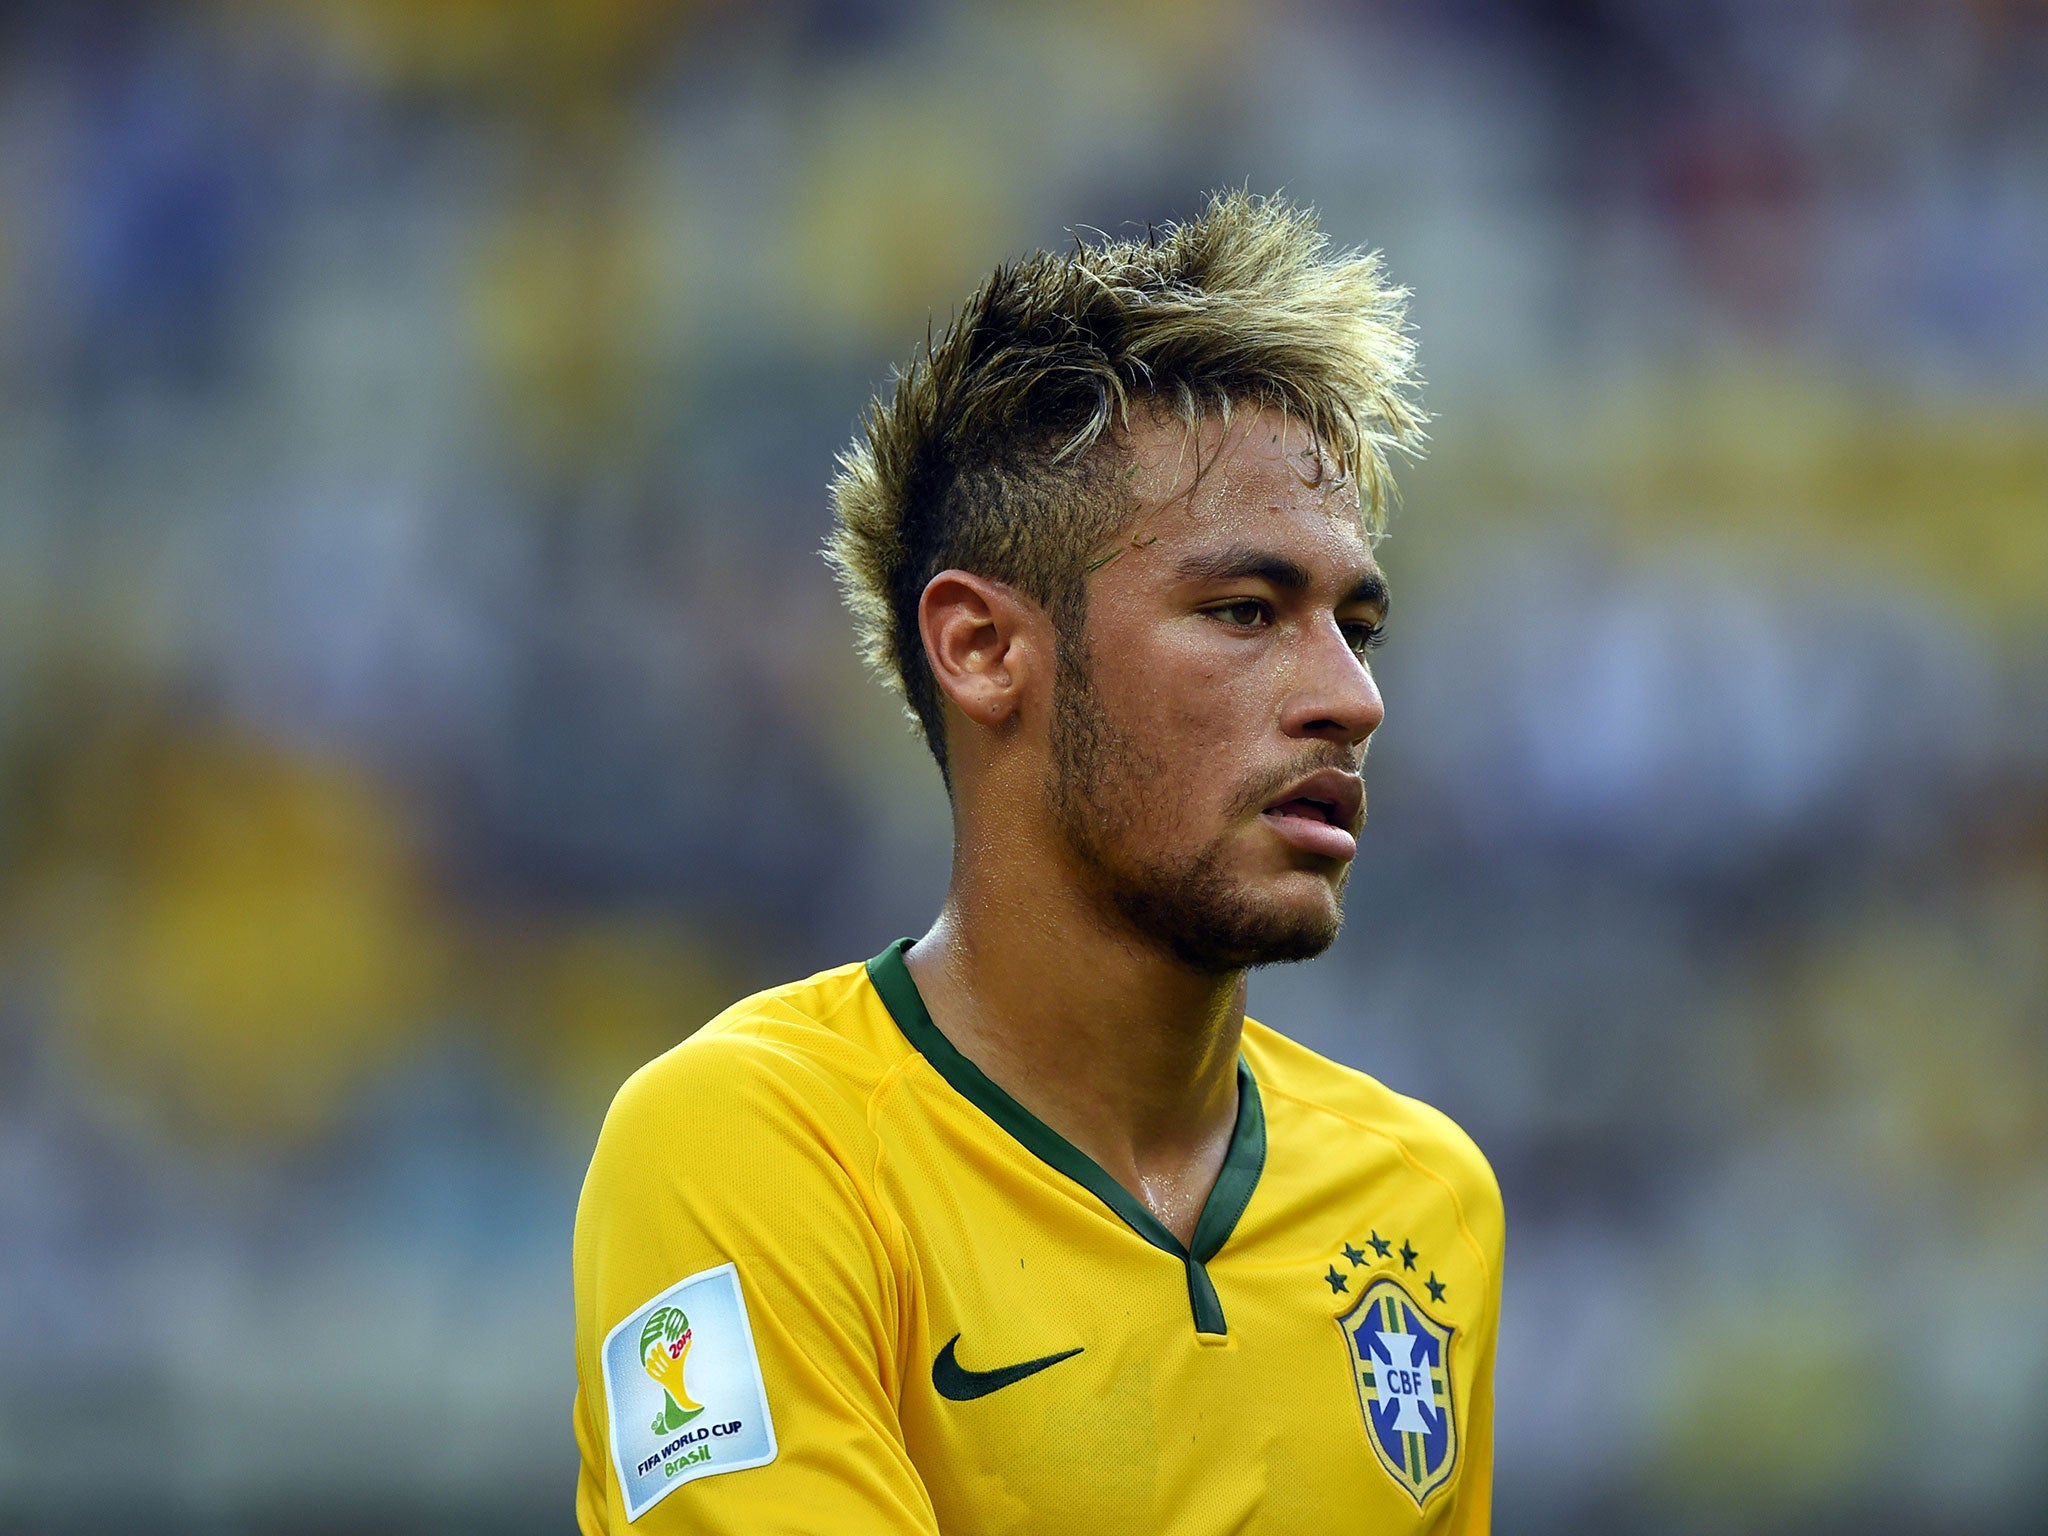 The Brazil striker Neymar